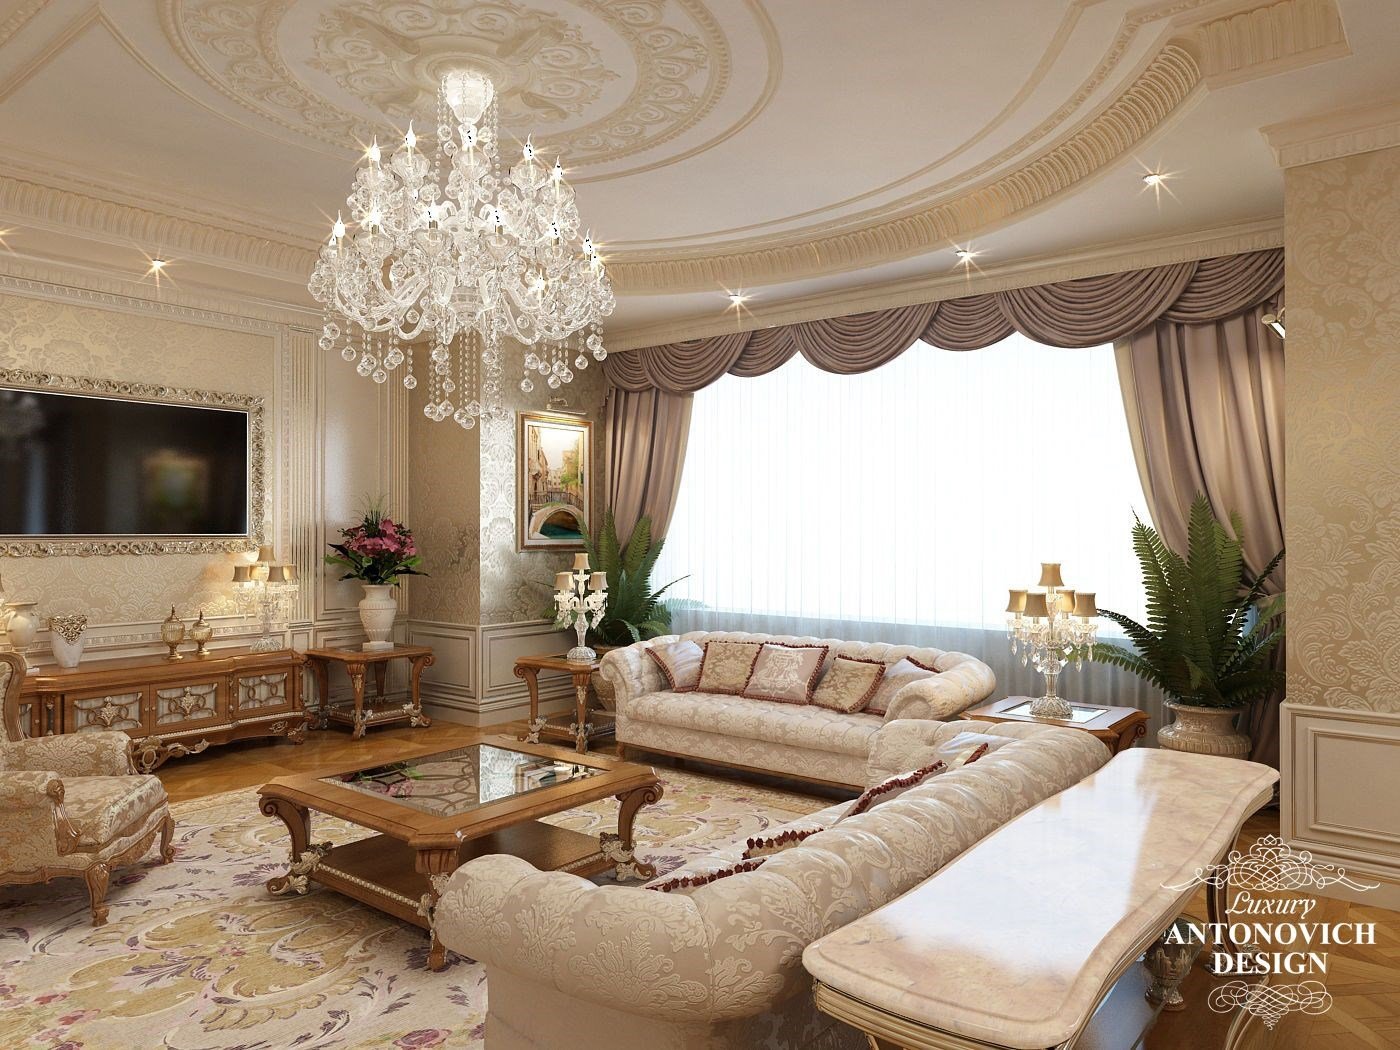 Luxury-Antonovich-Design-gostinnaya-11